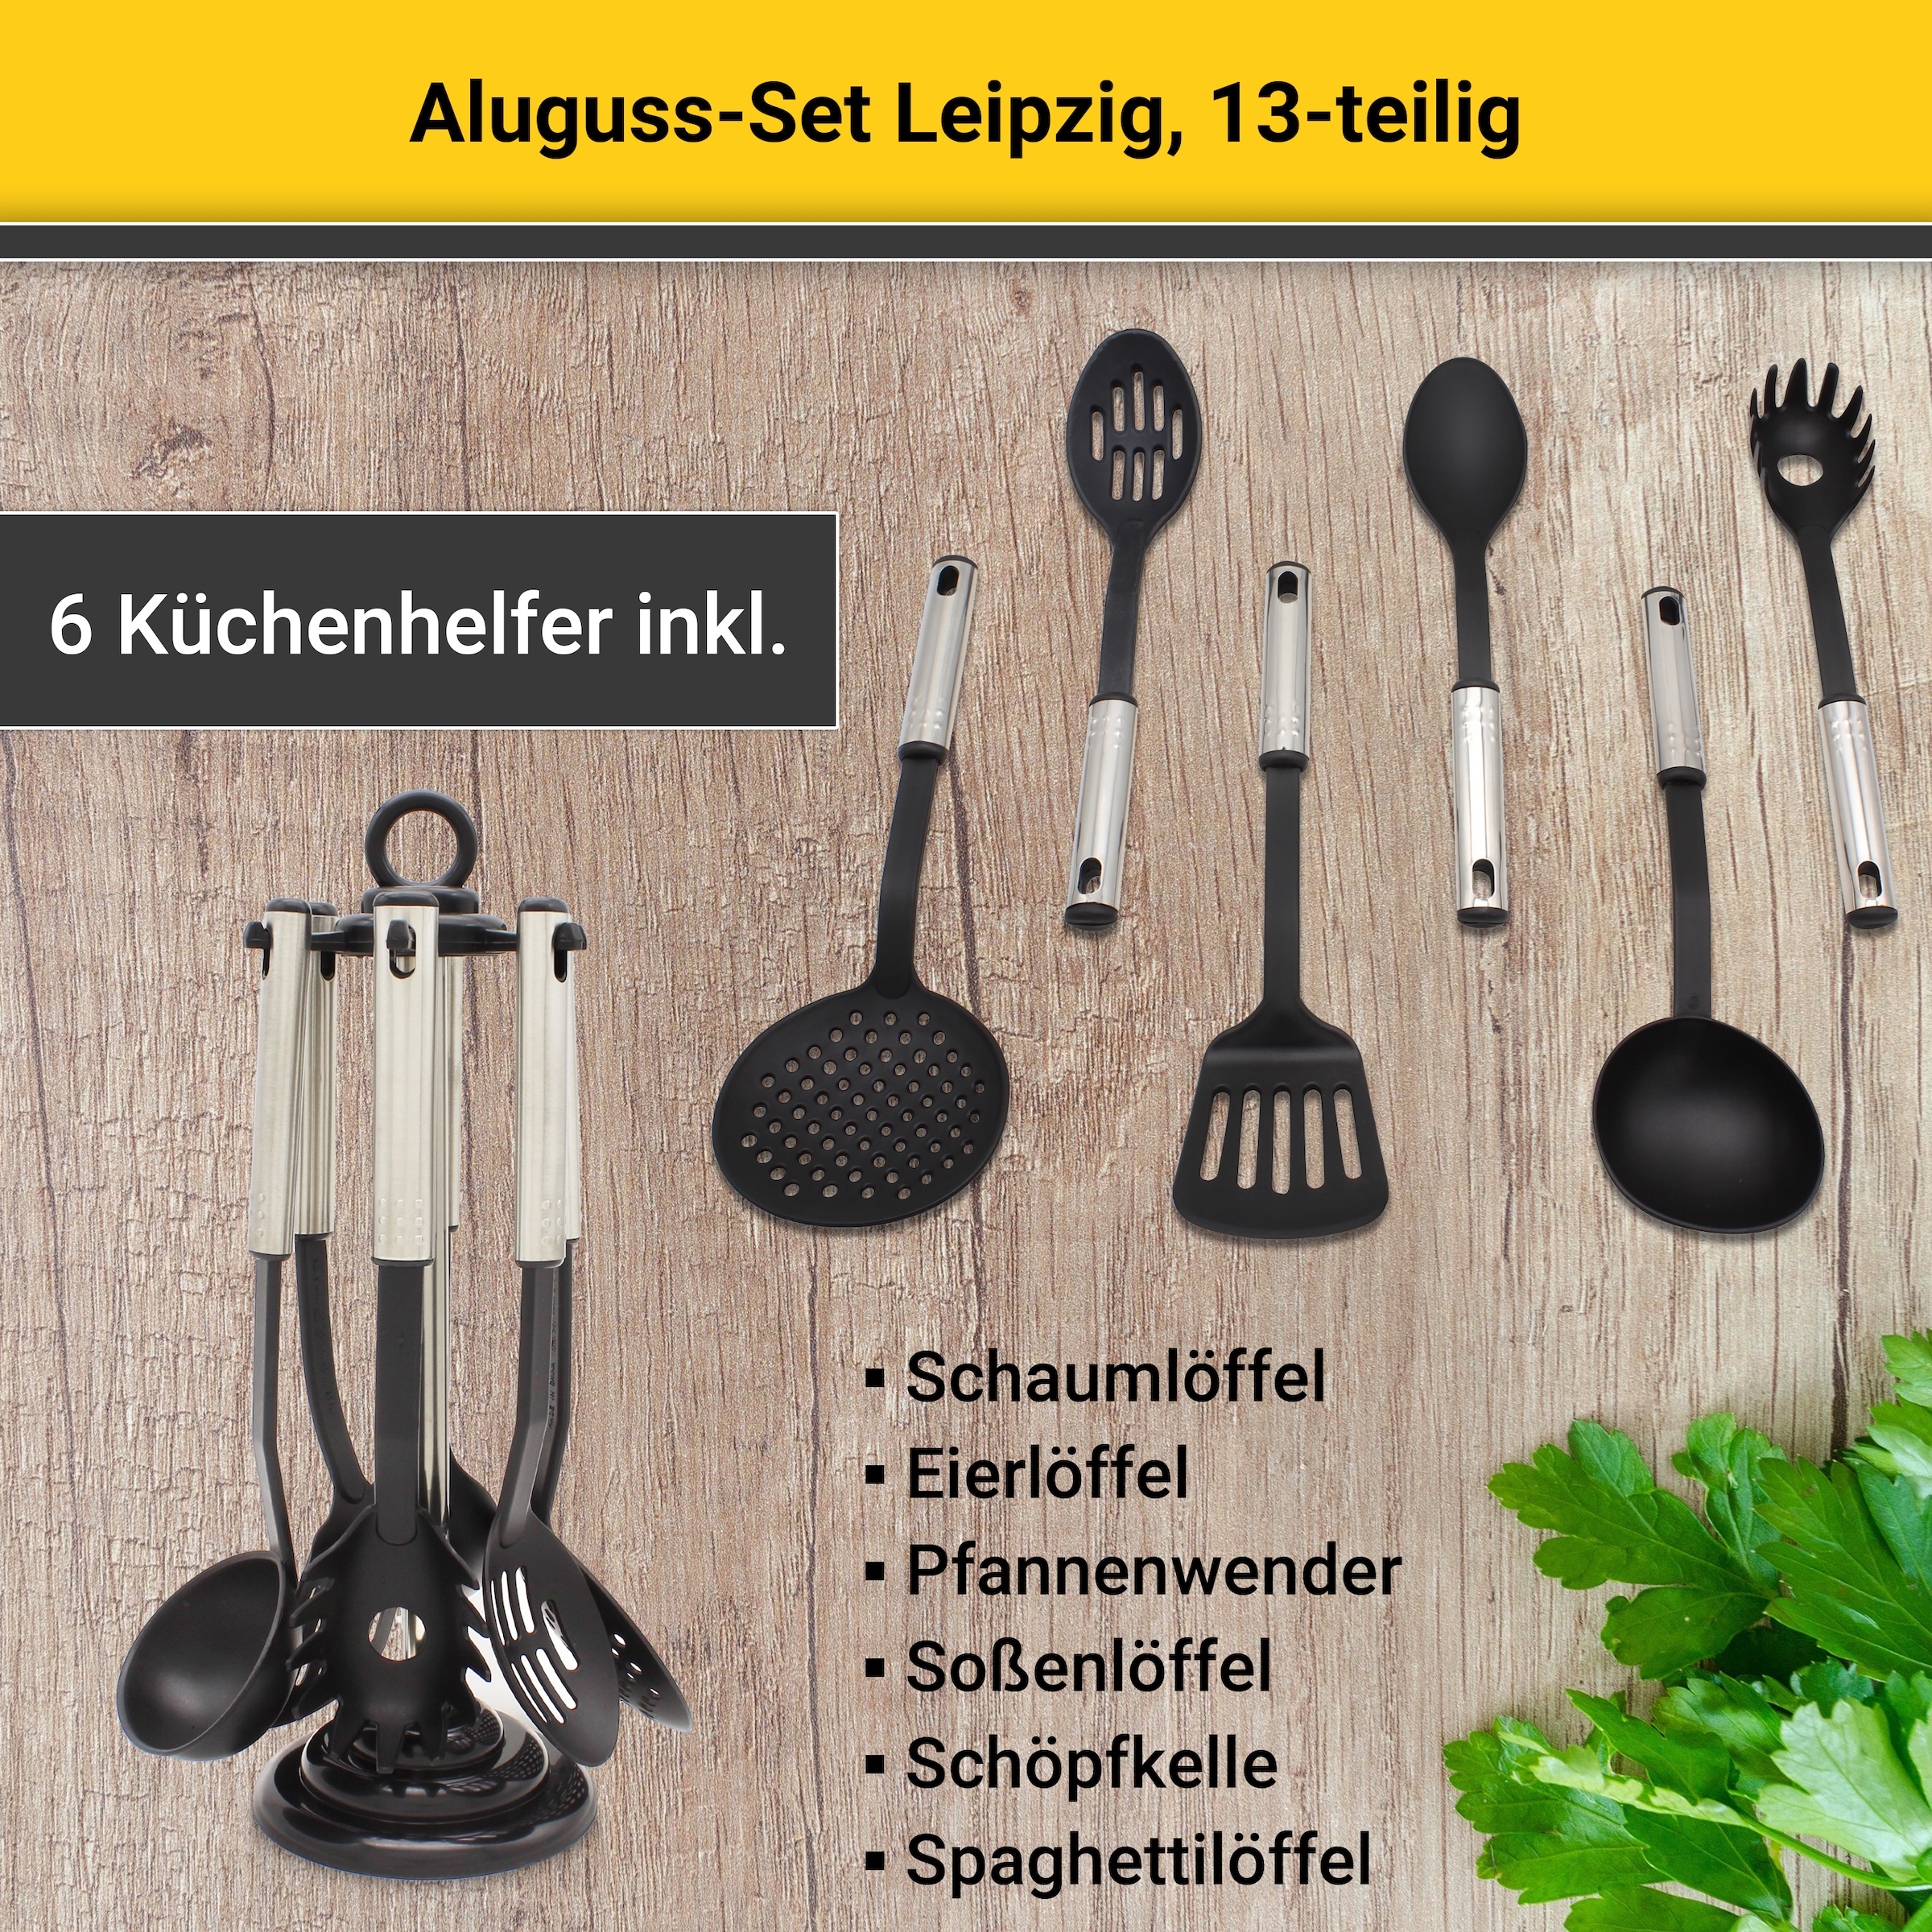 Krüger Topf-Set »Aluguss Topf-/Pfannenset LEIPZIG inkl. Küchenhelfern, 13 tlg.«, Aluminiumguss, (Set, 13 tlg., Fleischtopf 16+20 cm, Pfanne flach 20+28 cm, 7 tlg. Küchenhelferset), inkl. 7-tlg. Küchenhelfer-Set